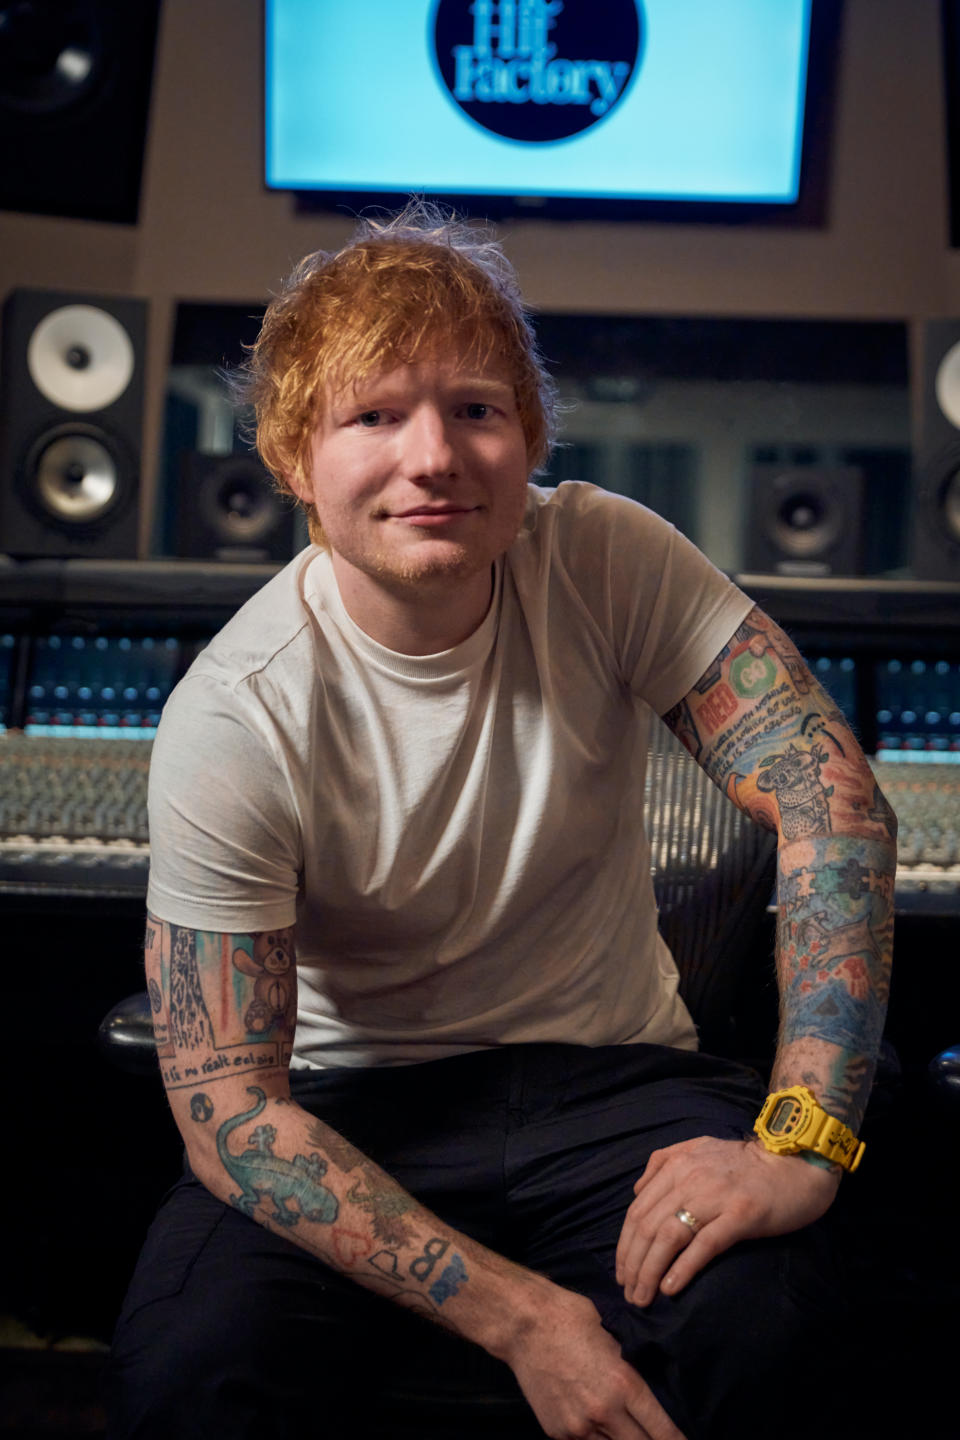 Ed Sheeran wearing the G-Shock Ref. 6900, Subtract by Ed Sheeran for Hodinkee.